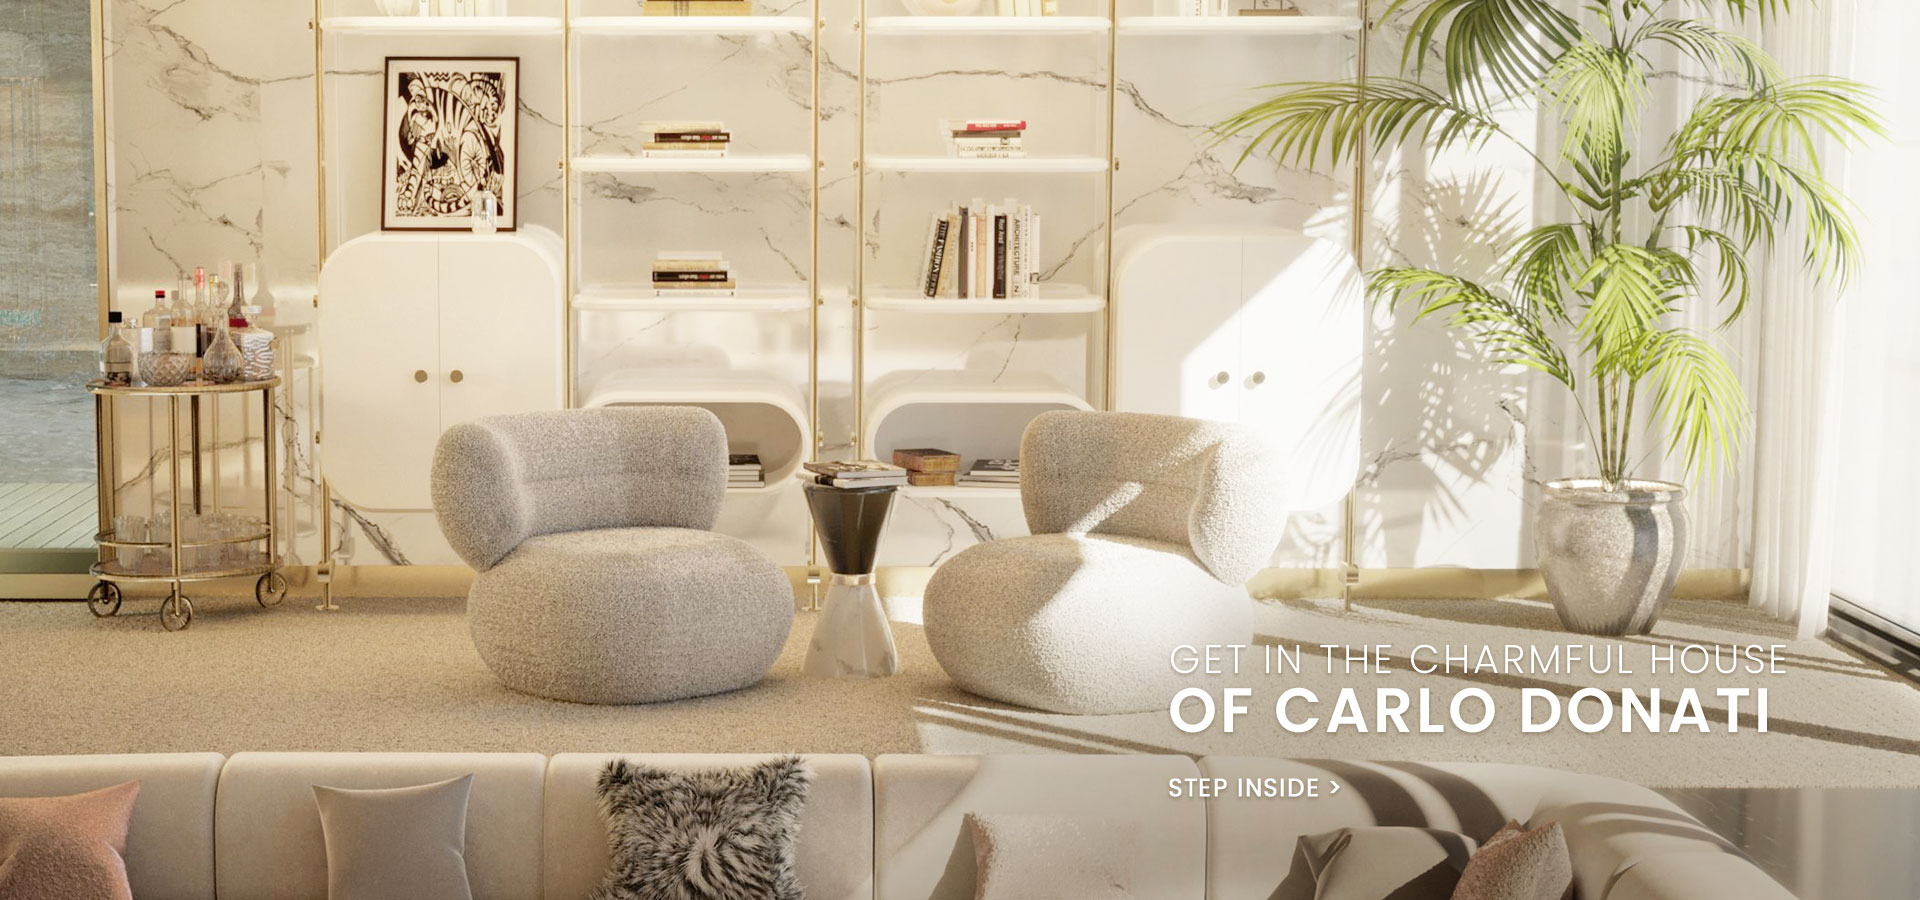 carlodonatihousevt mid-century furniture Mid-Century Annual Sales: The Best Mid-Century Furniture Up To 70% Off! saint tropez carlo donati home